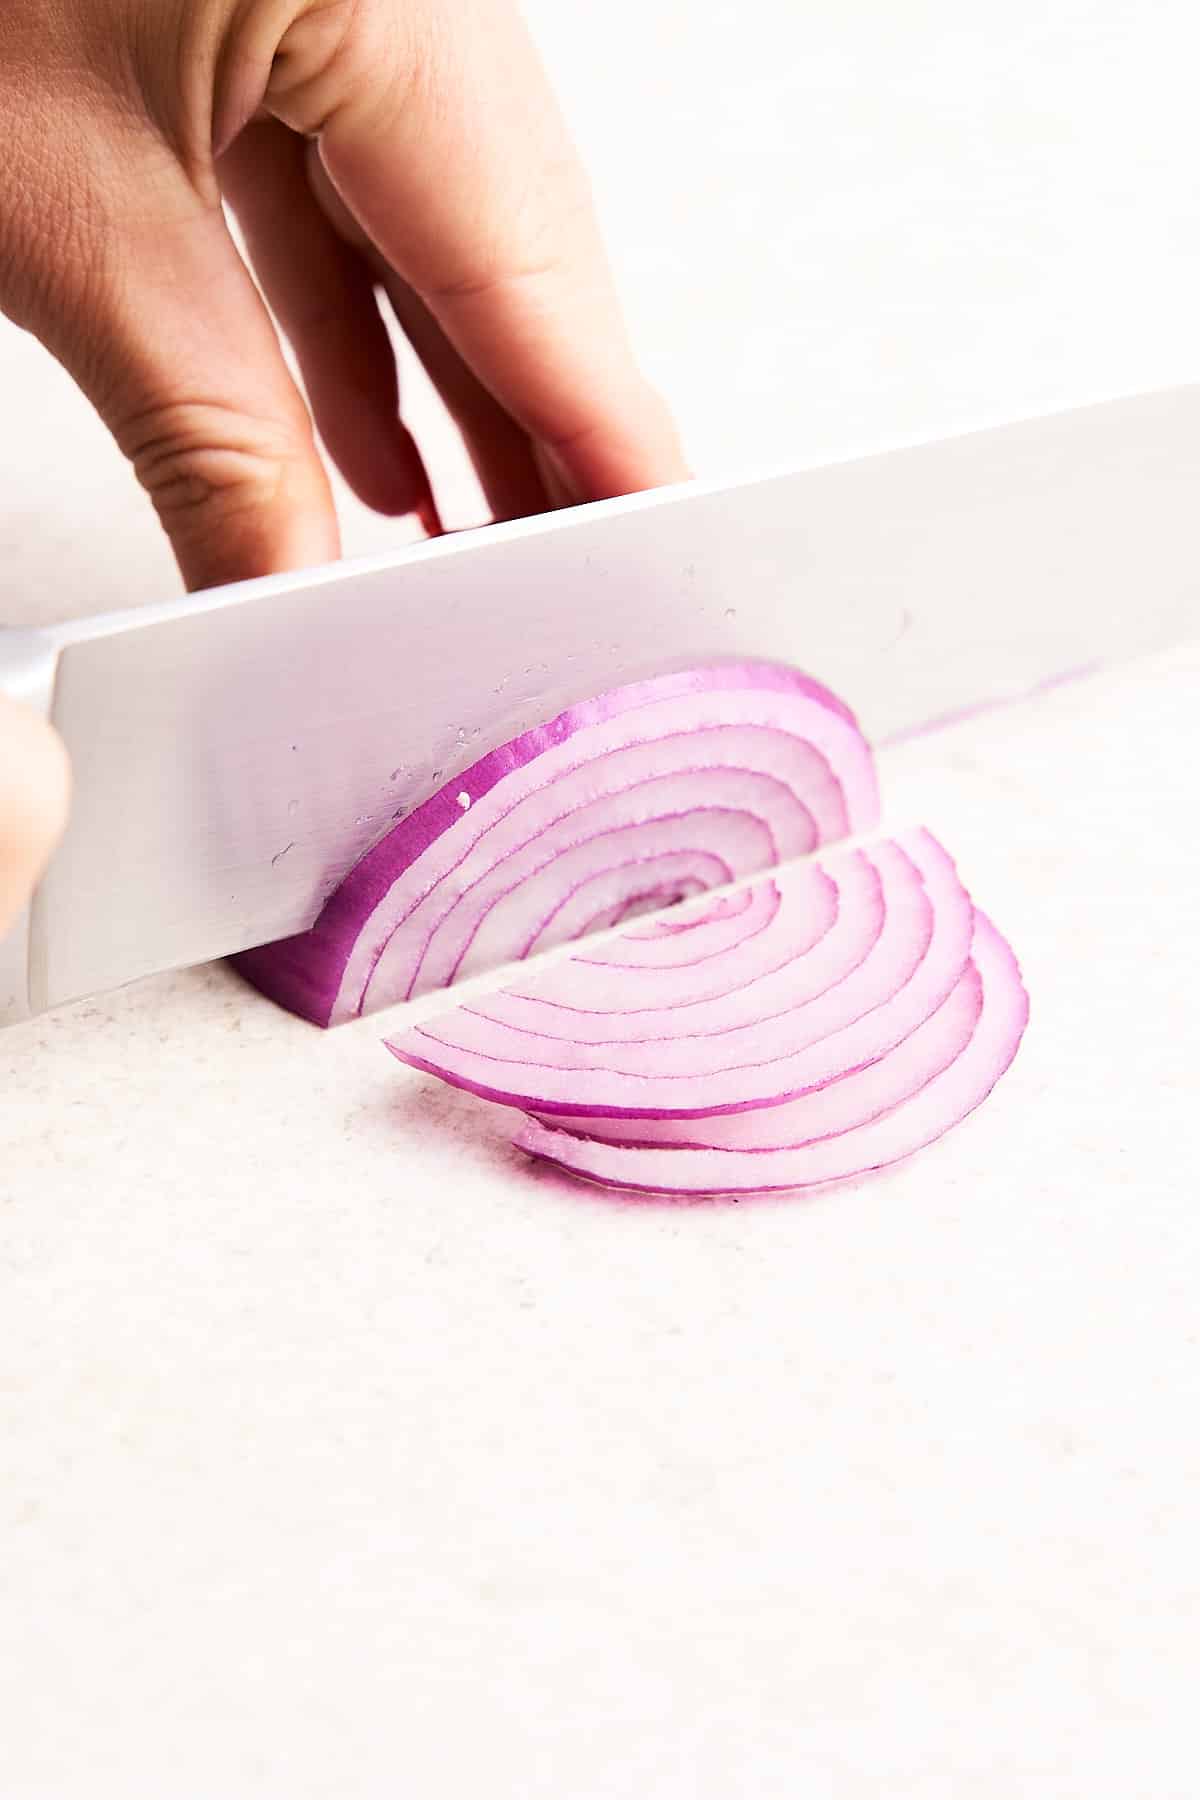 Slicing an onion crosswise.